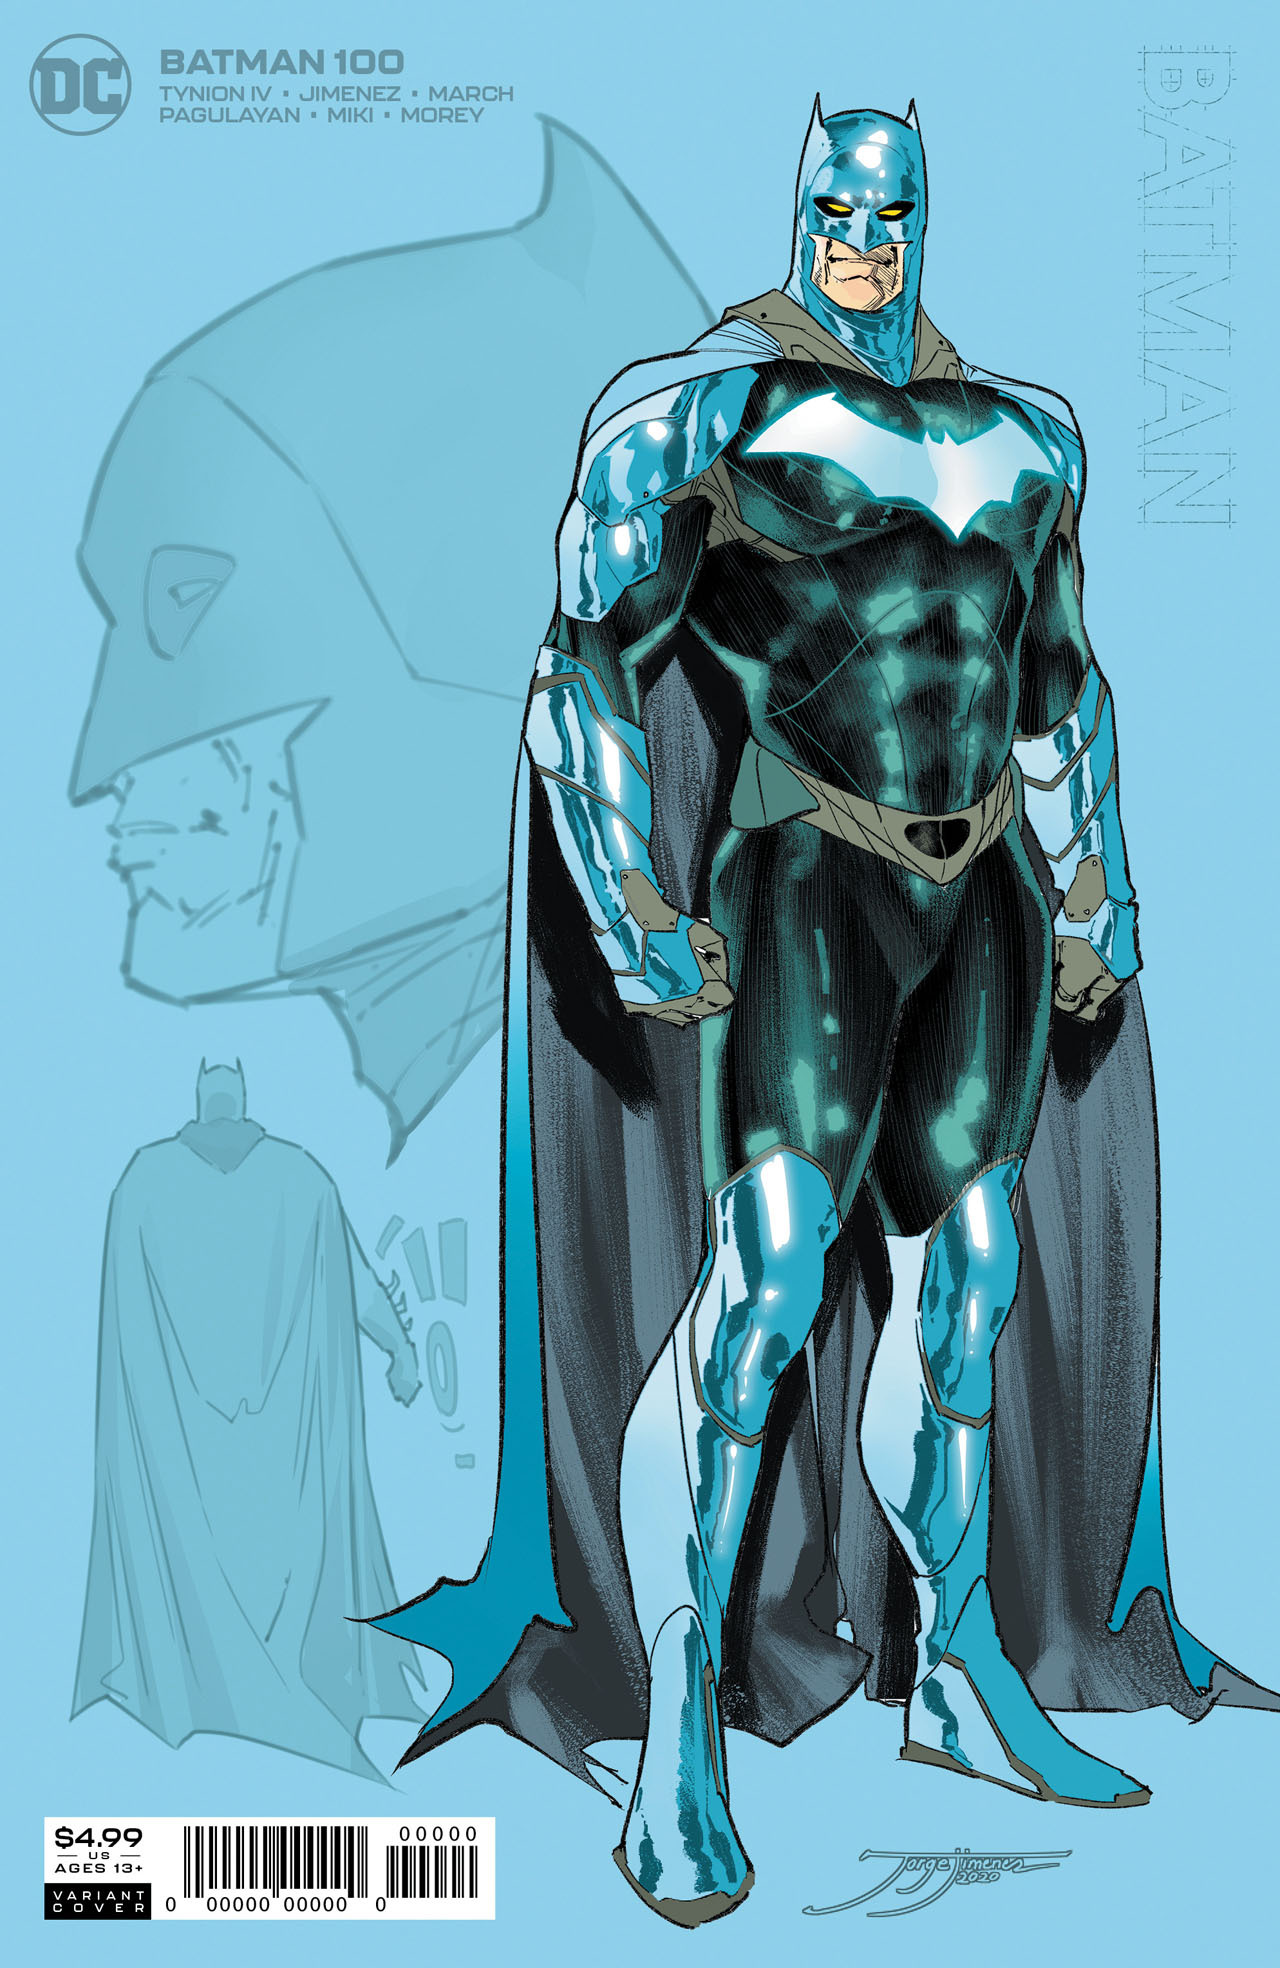 New Batman Costume Design Teased Ahead Of Batman 100 Den Of Geek